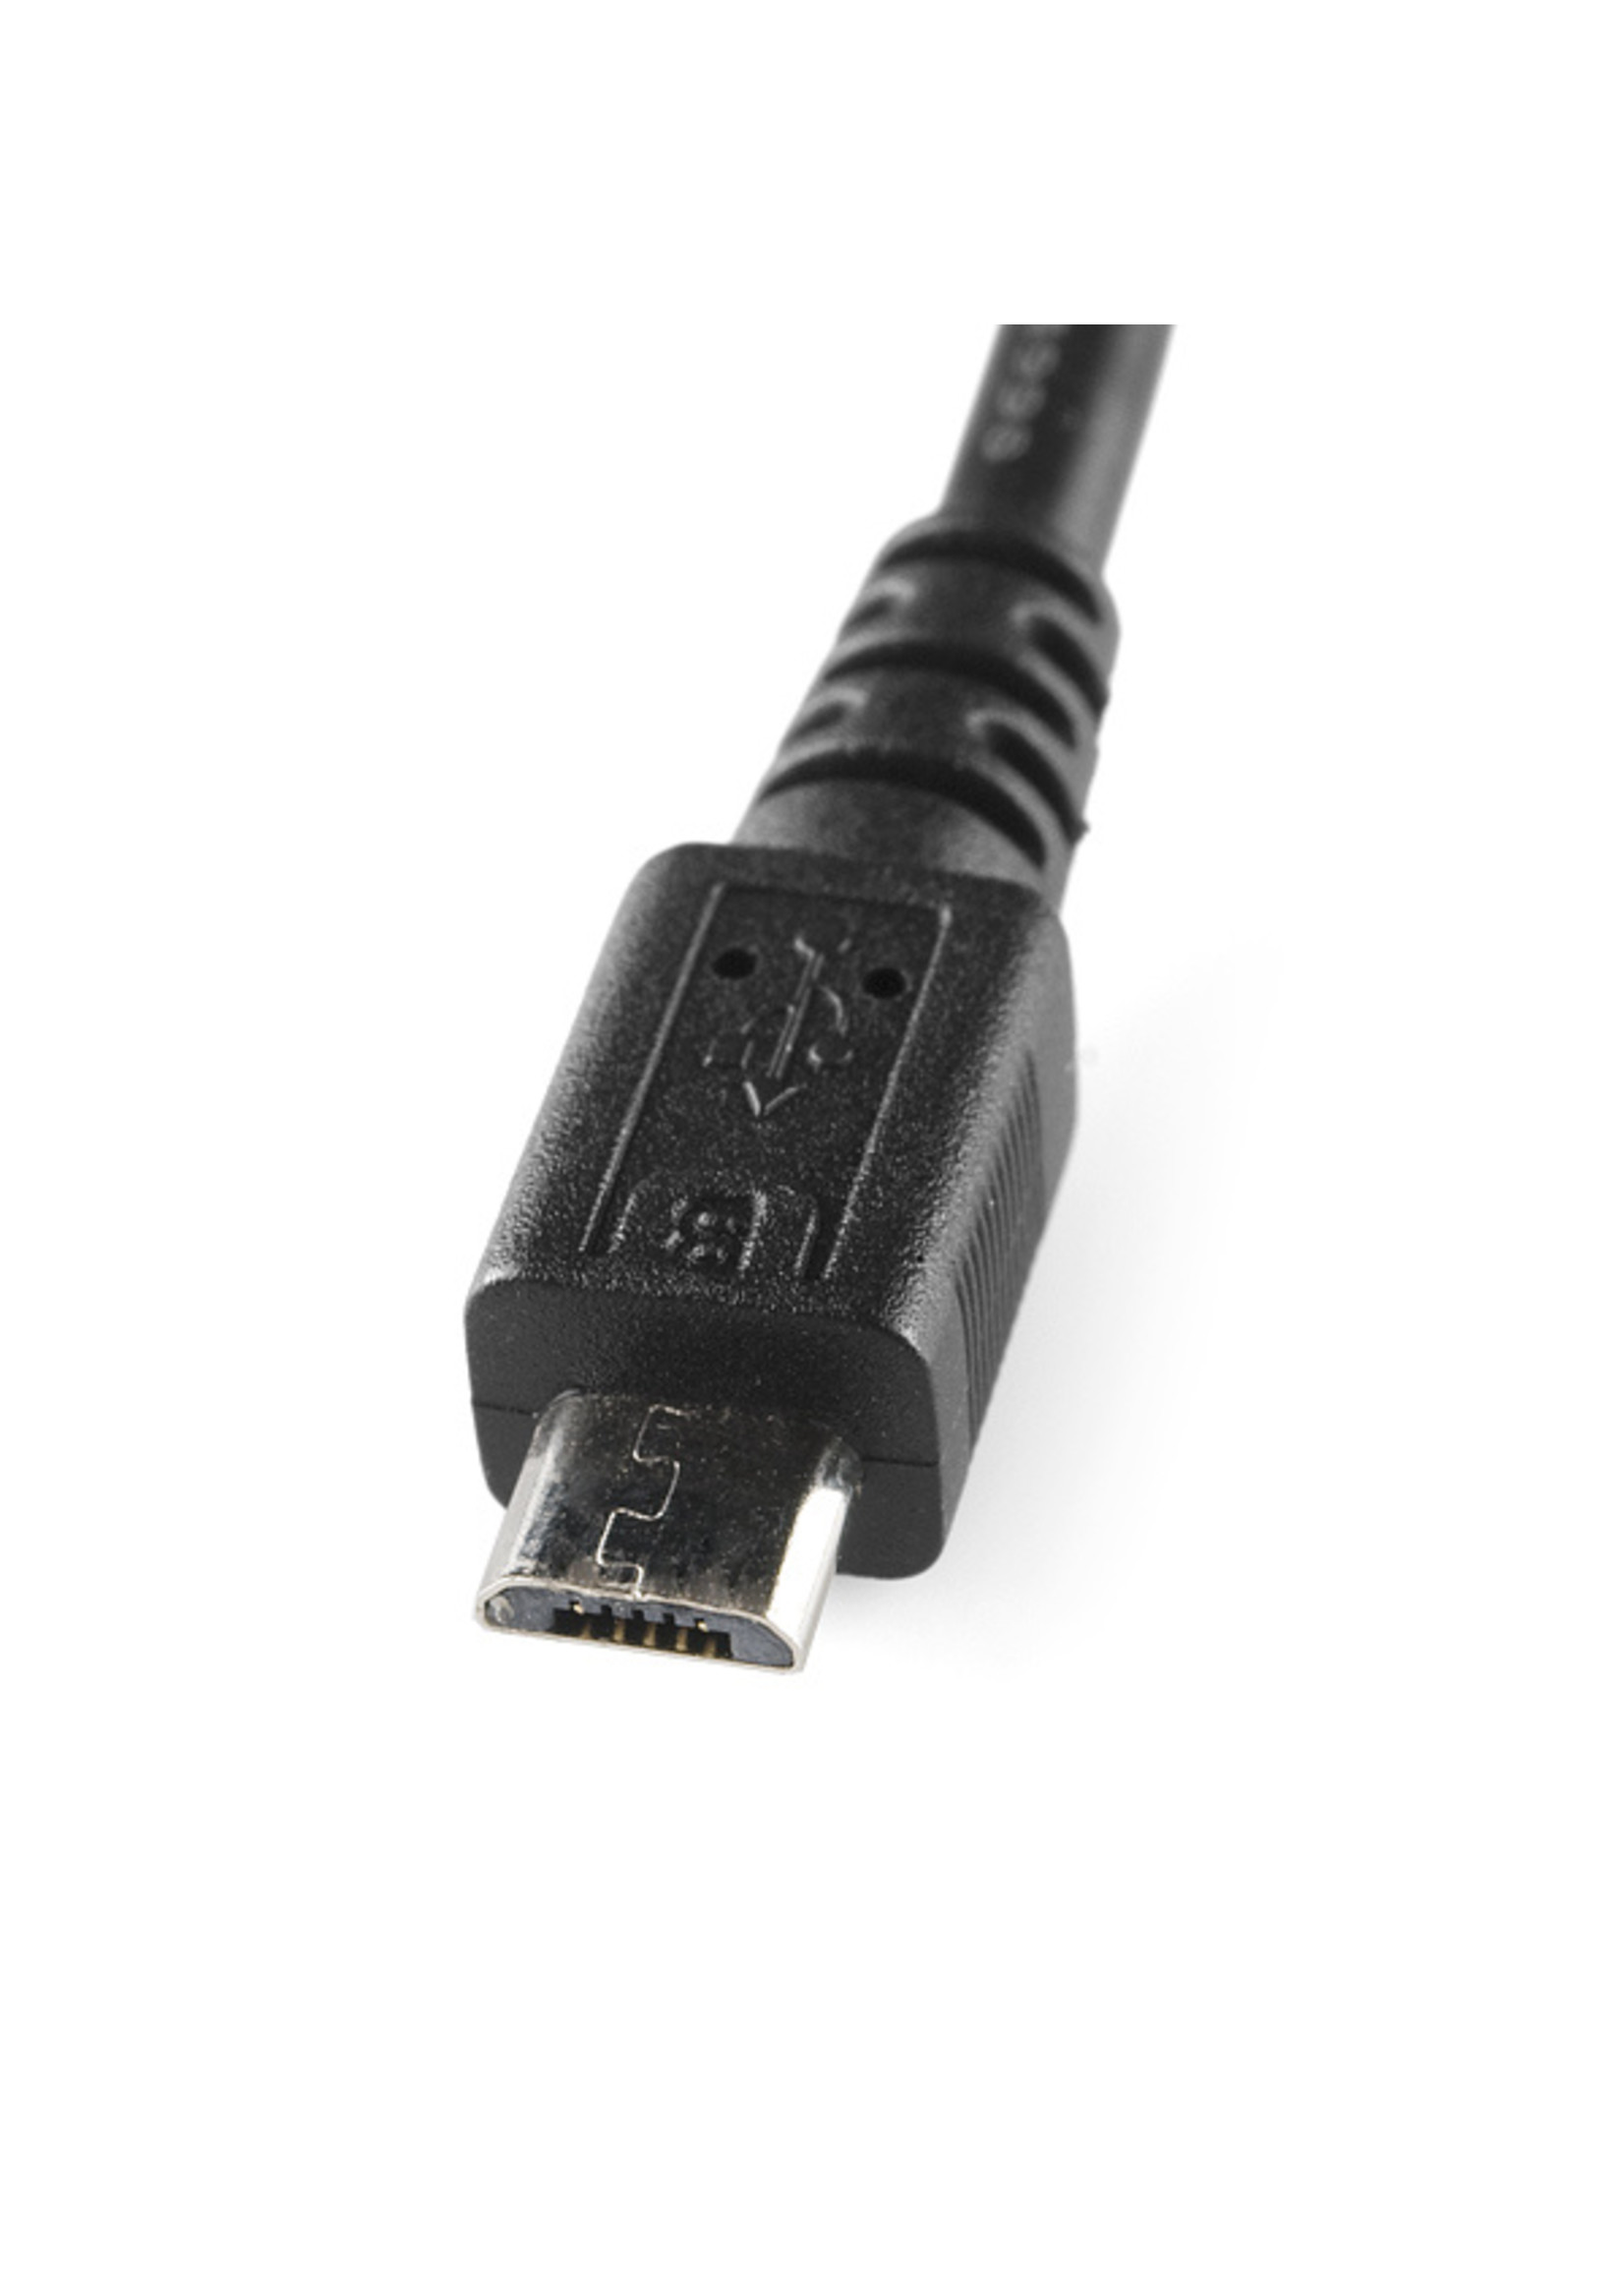 Sprakfun USB A to Micro B Cable 6ft